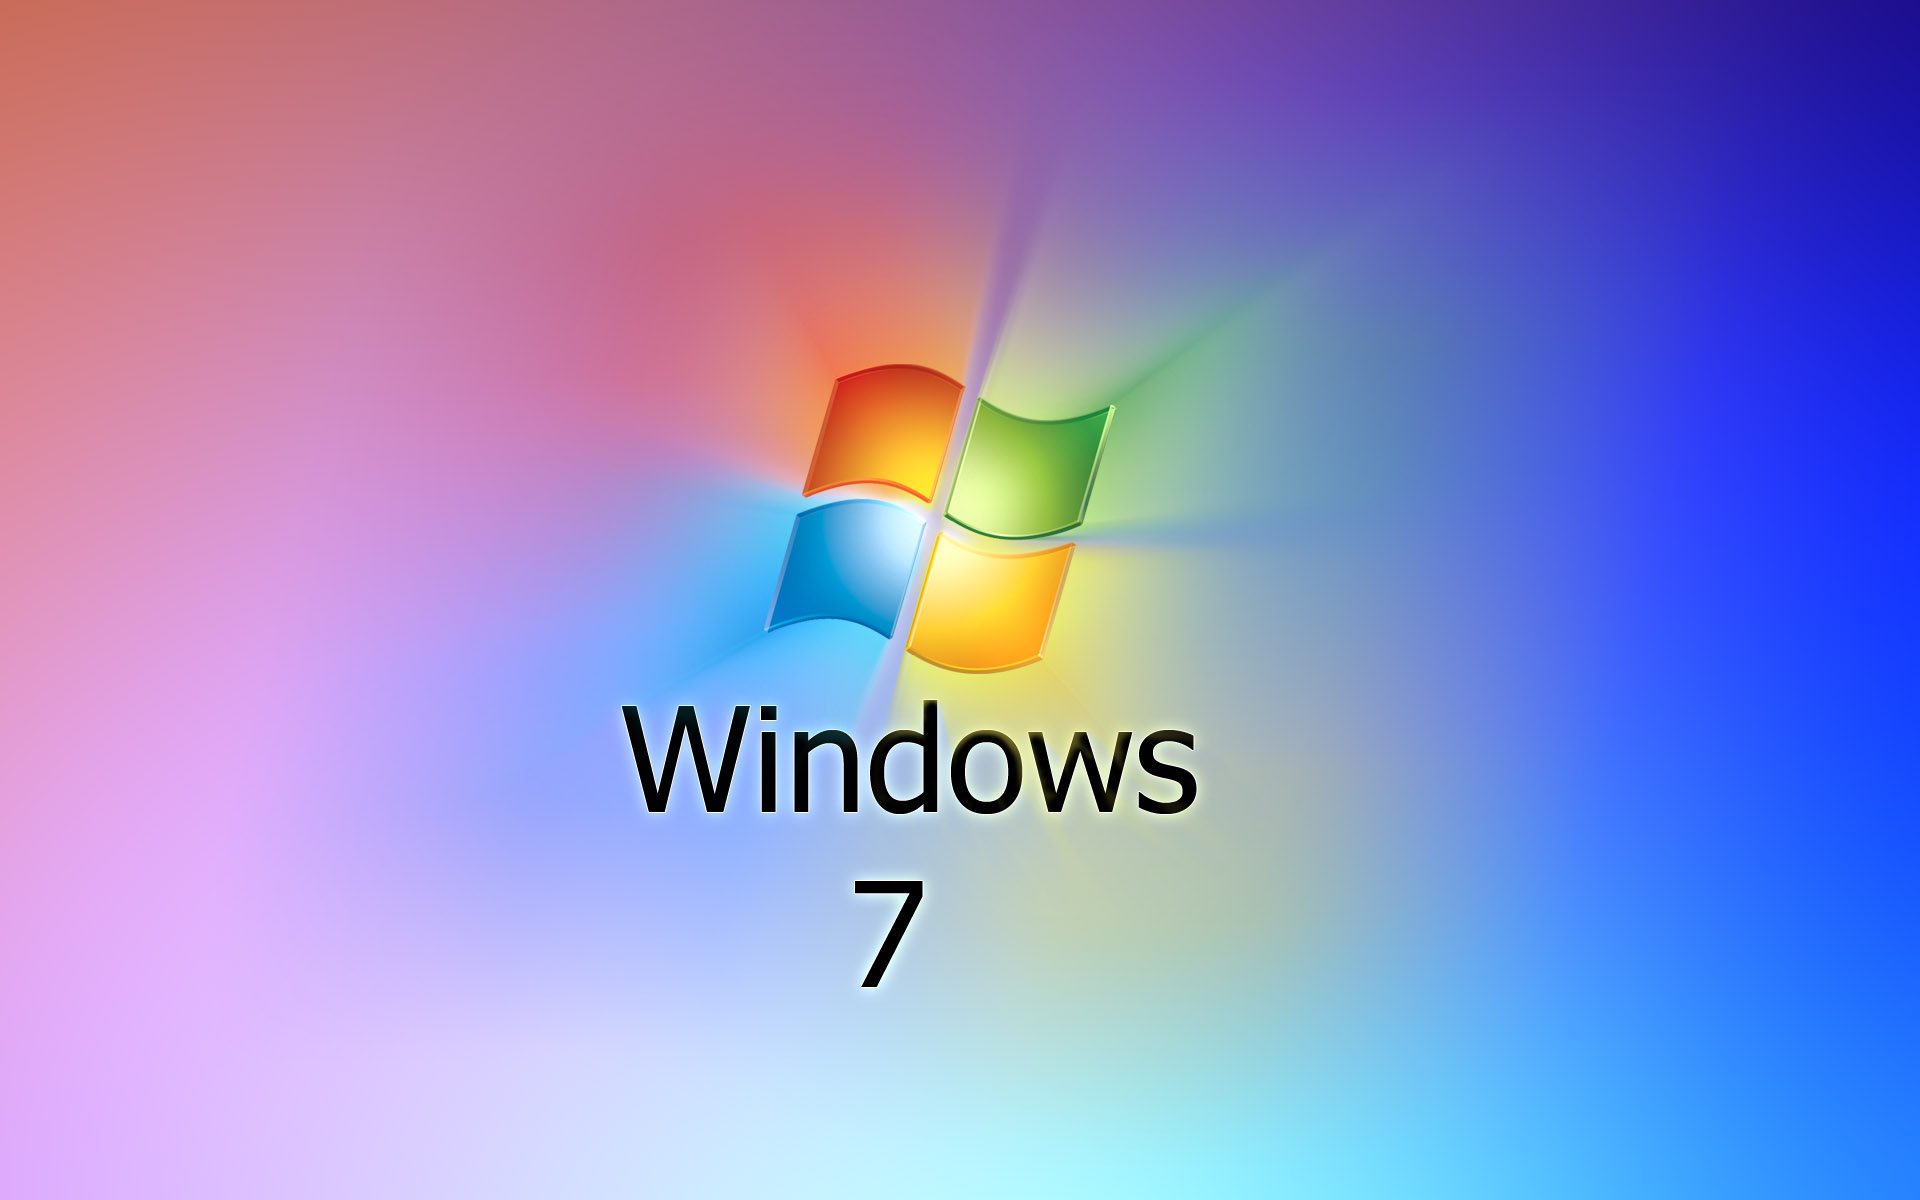 windows 7 wallpaper hd for desktop